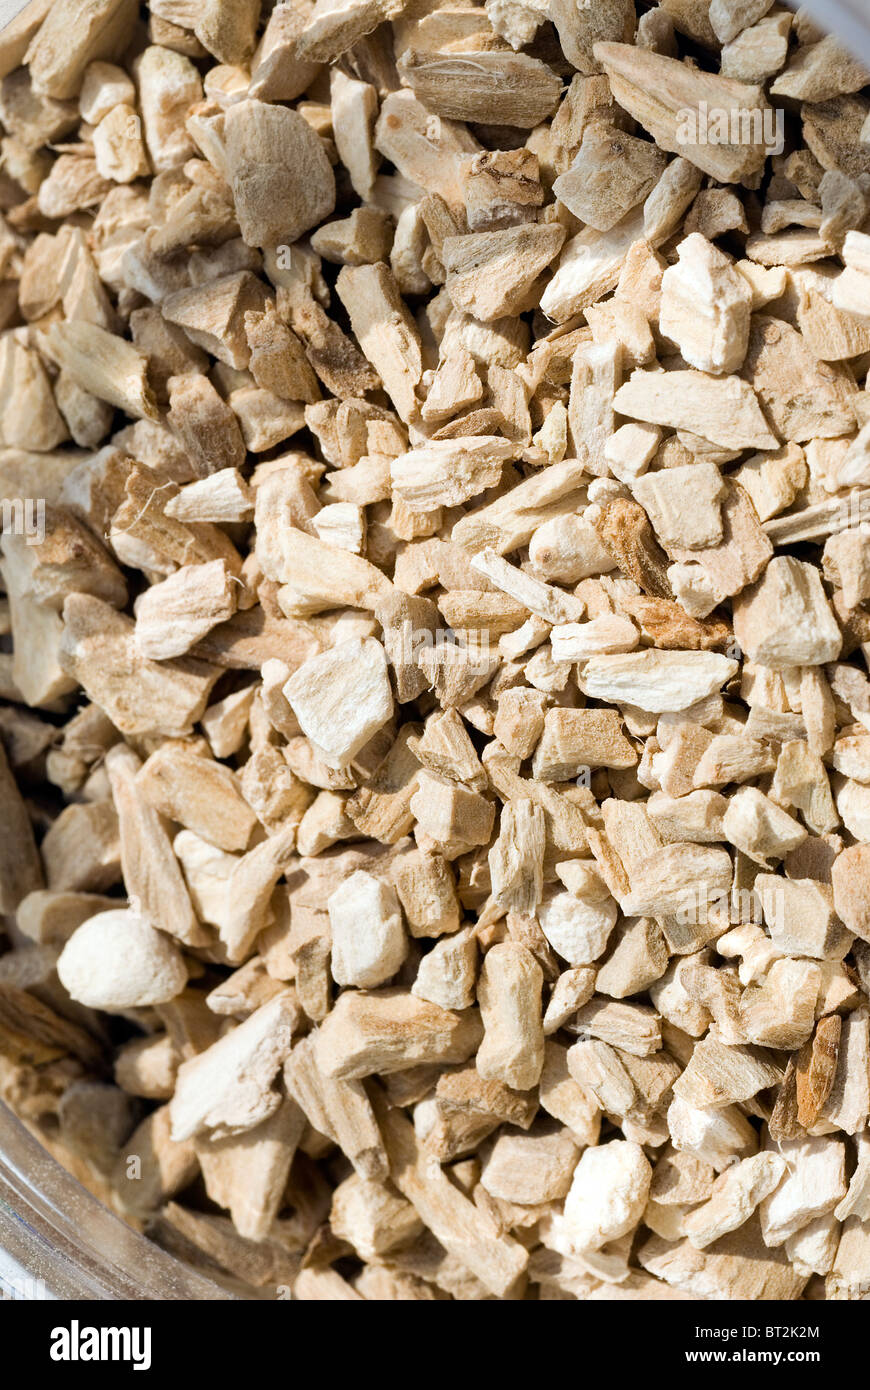 Pieces of sweet calamus seeds Stock Photo